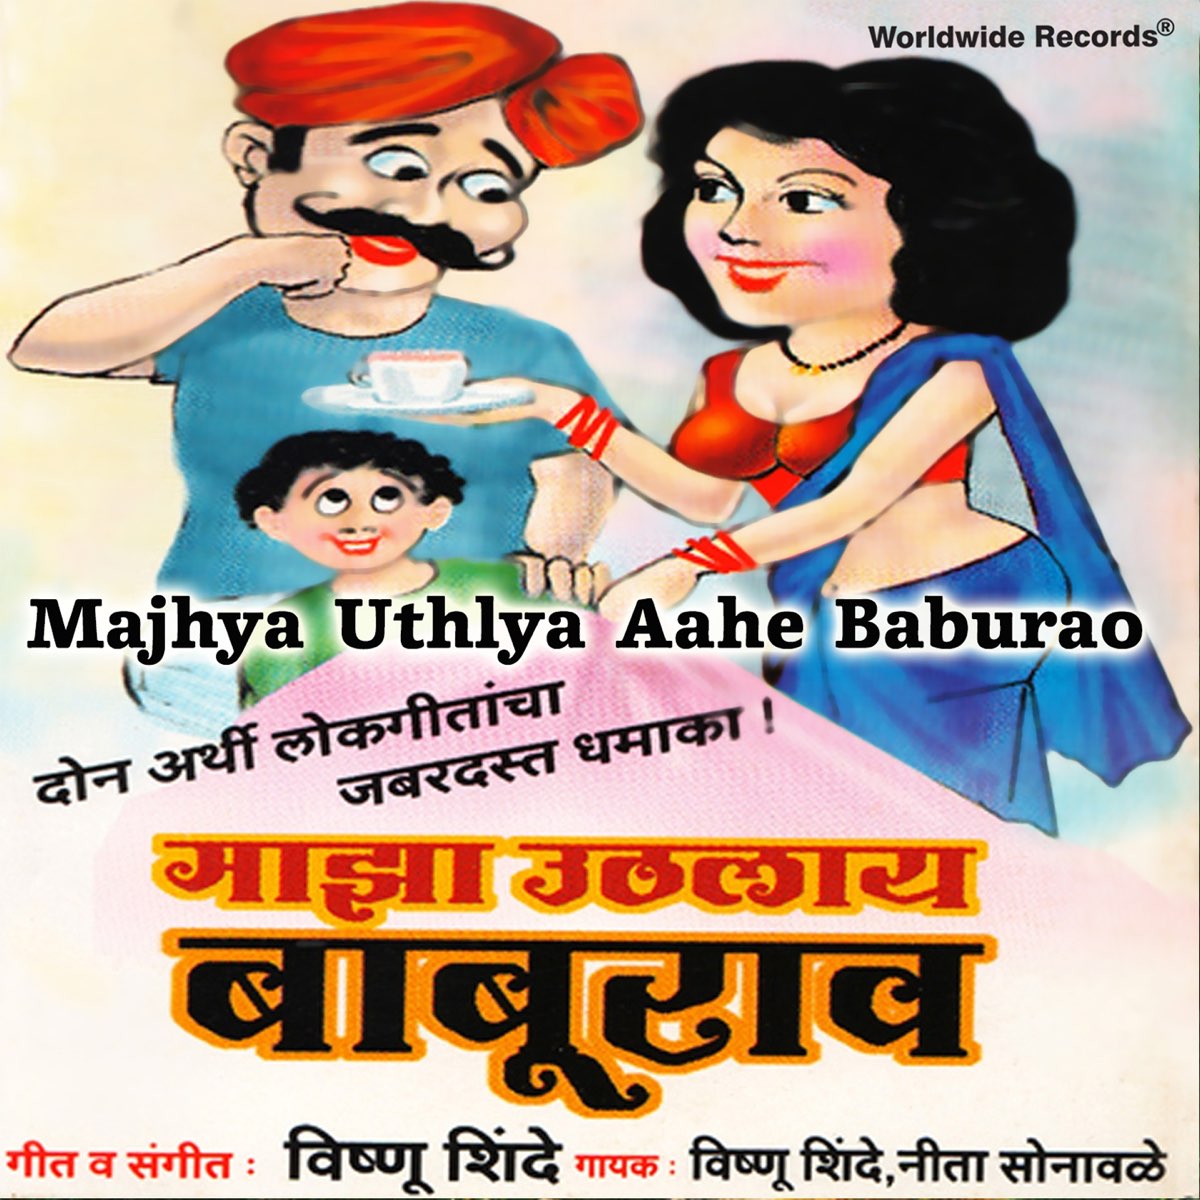 Majhya Uthlya Aahe Baburao by Vishnu Shinde & Neeta Sonavne on Apple Music